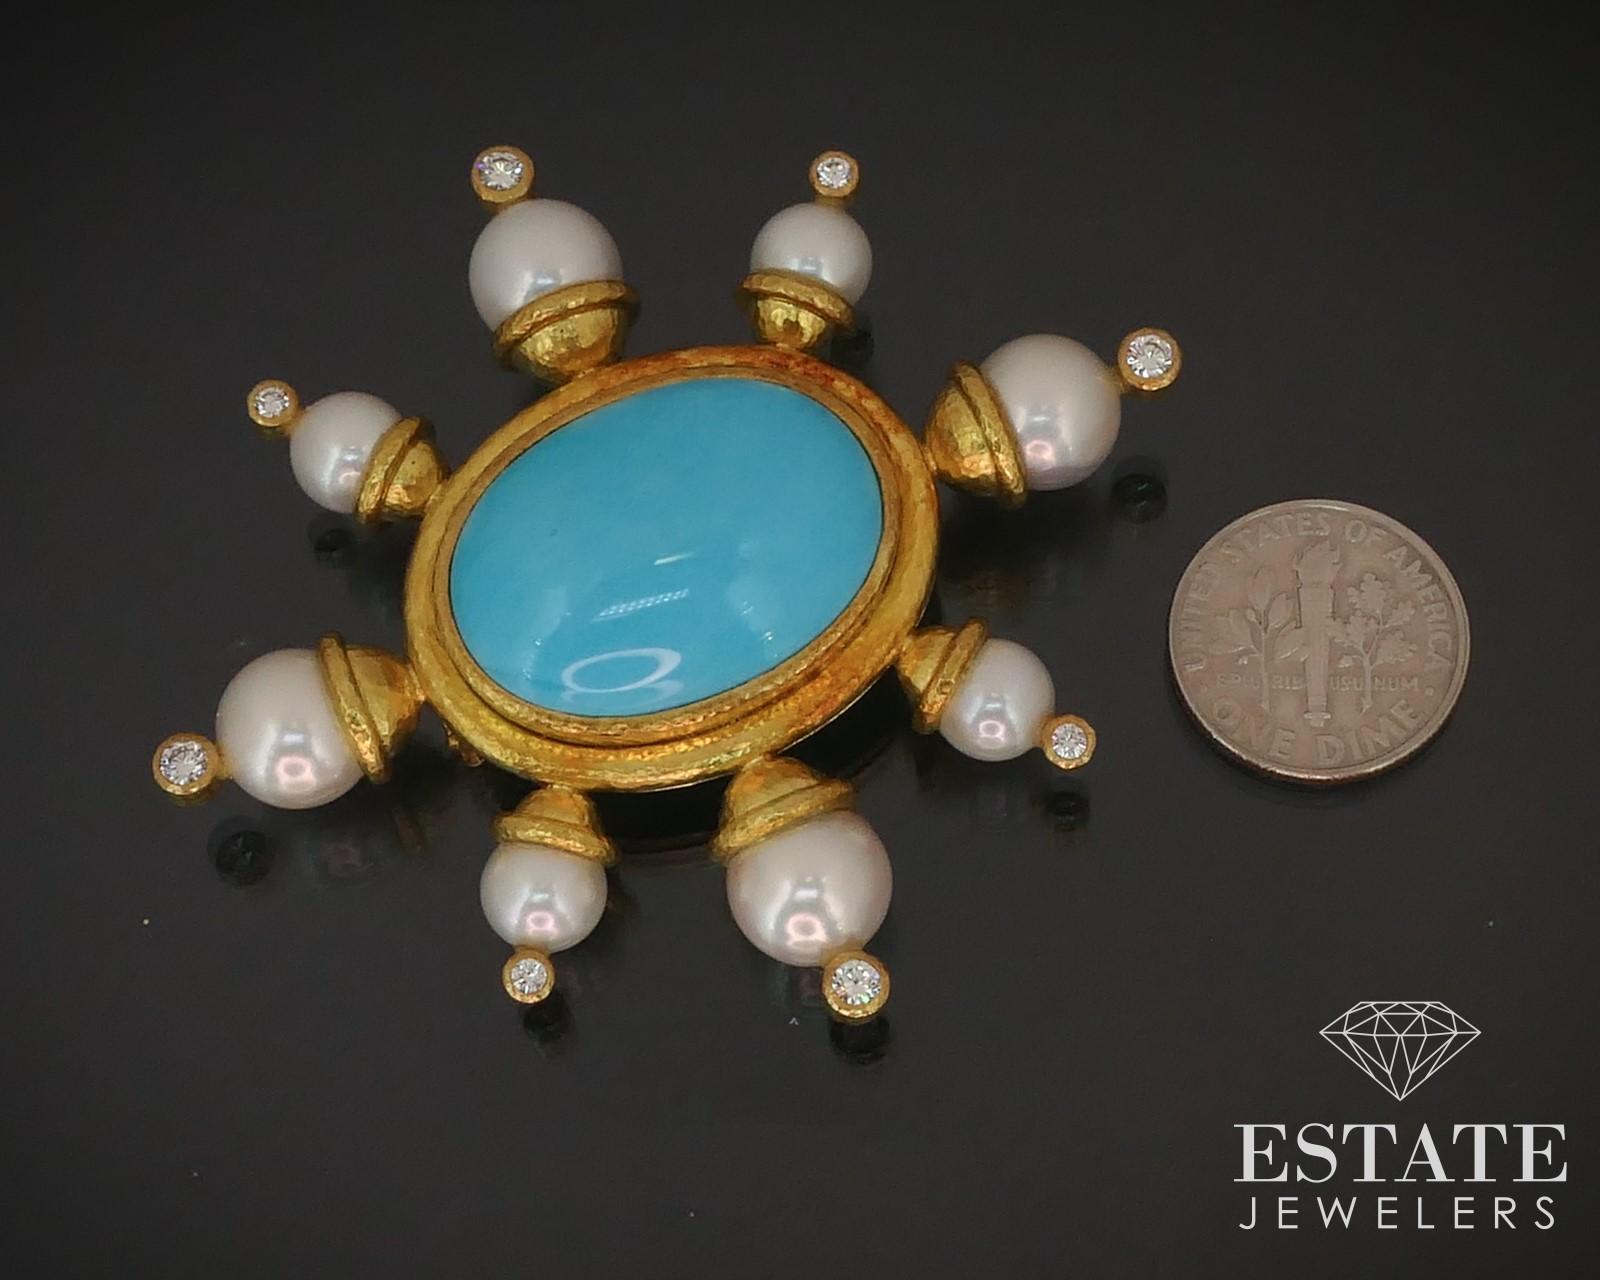 Contemporain Elizabeth Locke Broche fourrure en or jaune 18 carats, turquoise, diamant et perle 33 g i14888 en vente